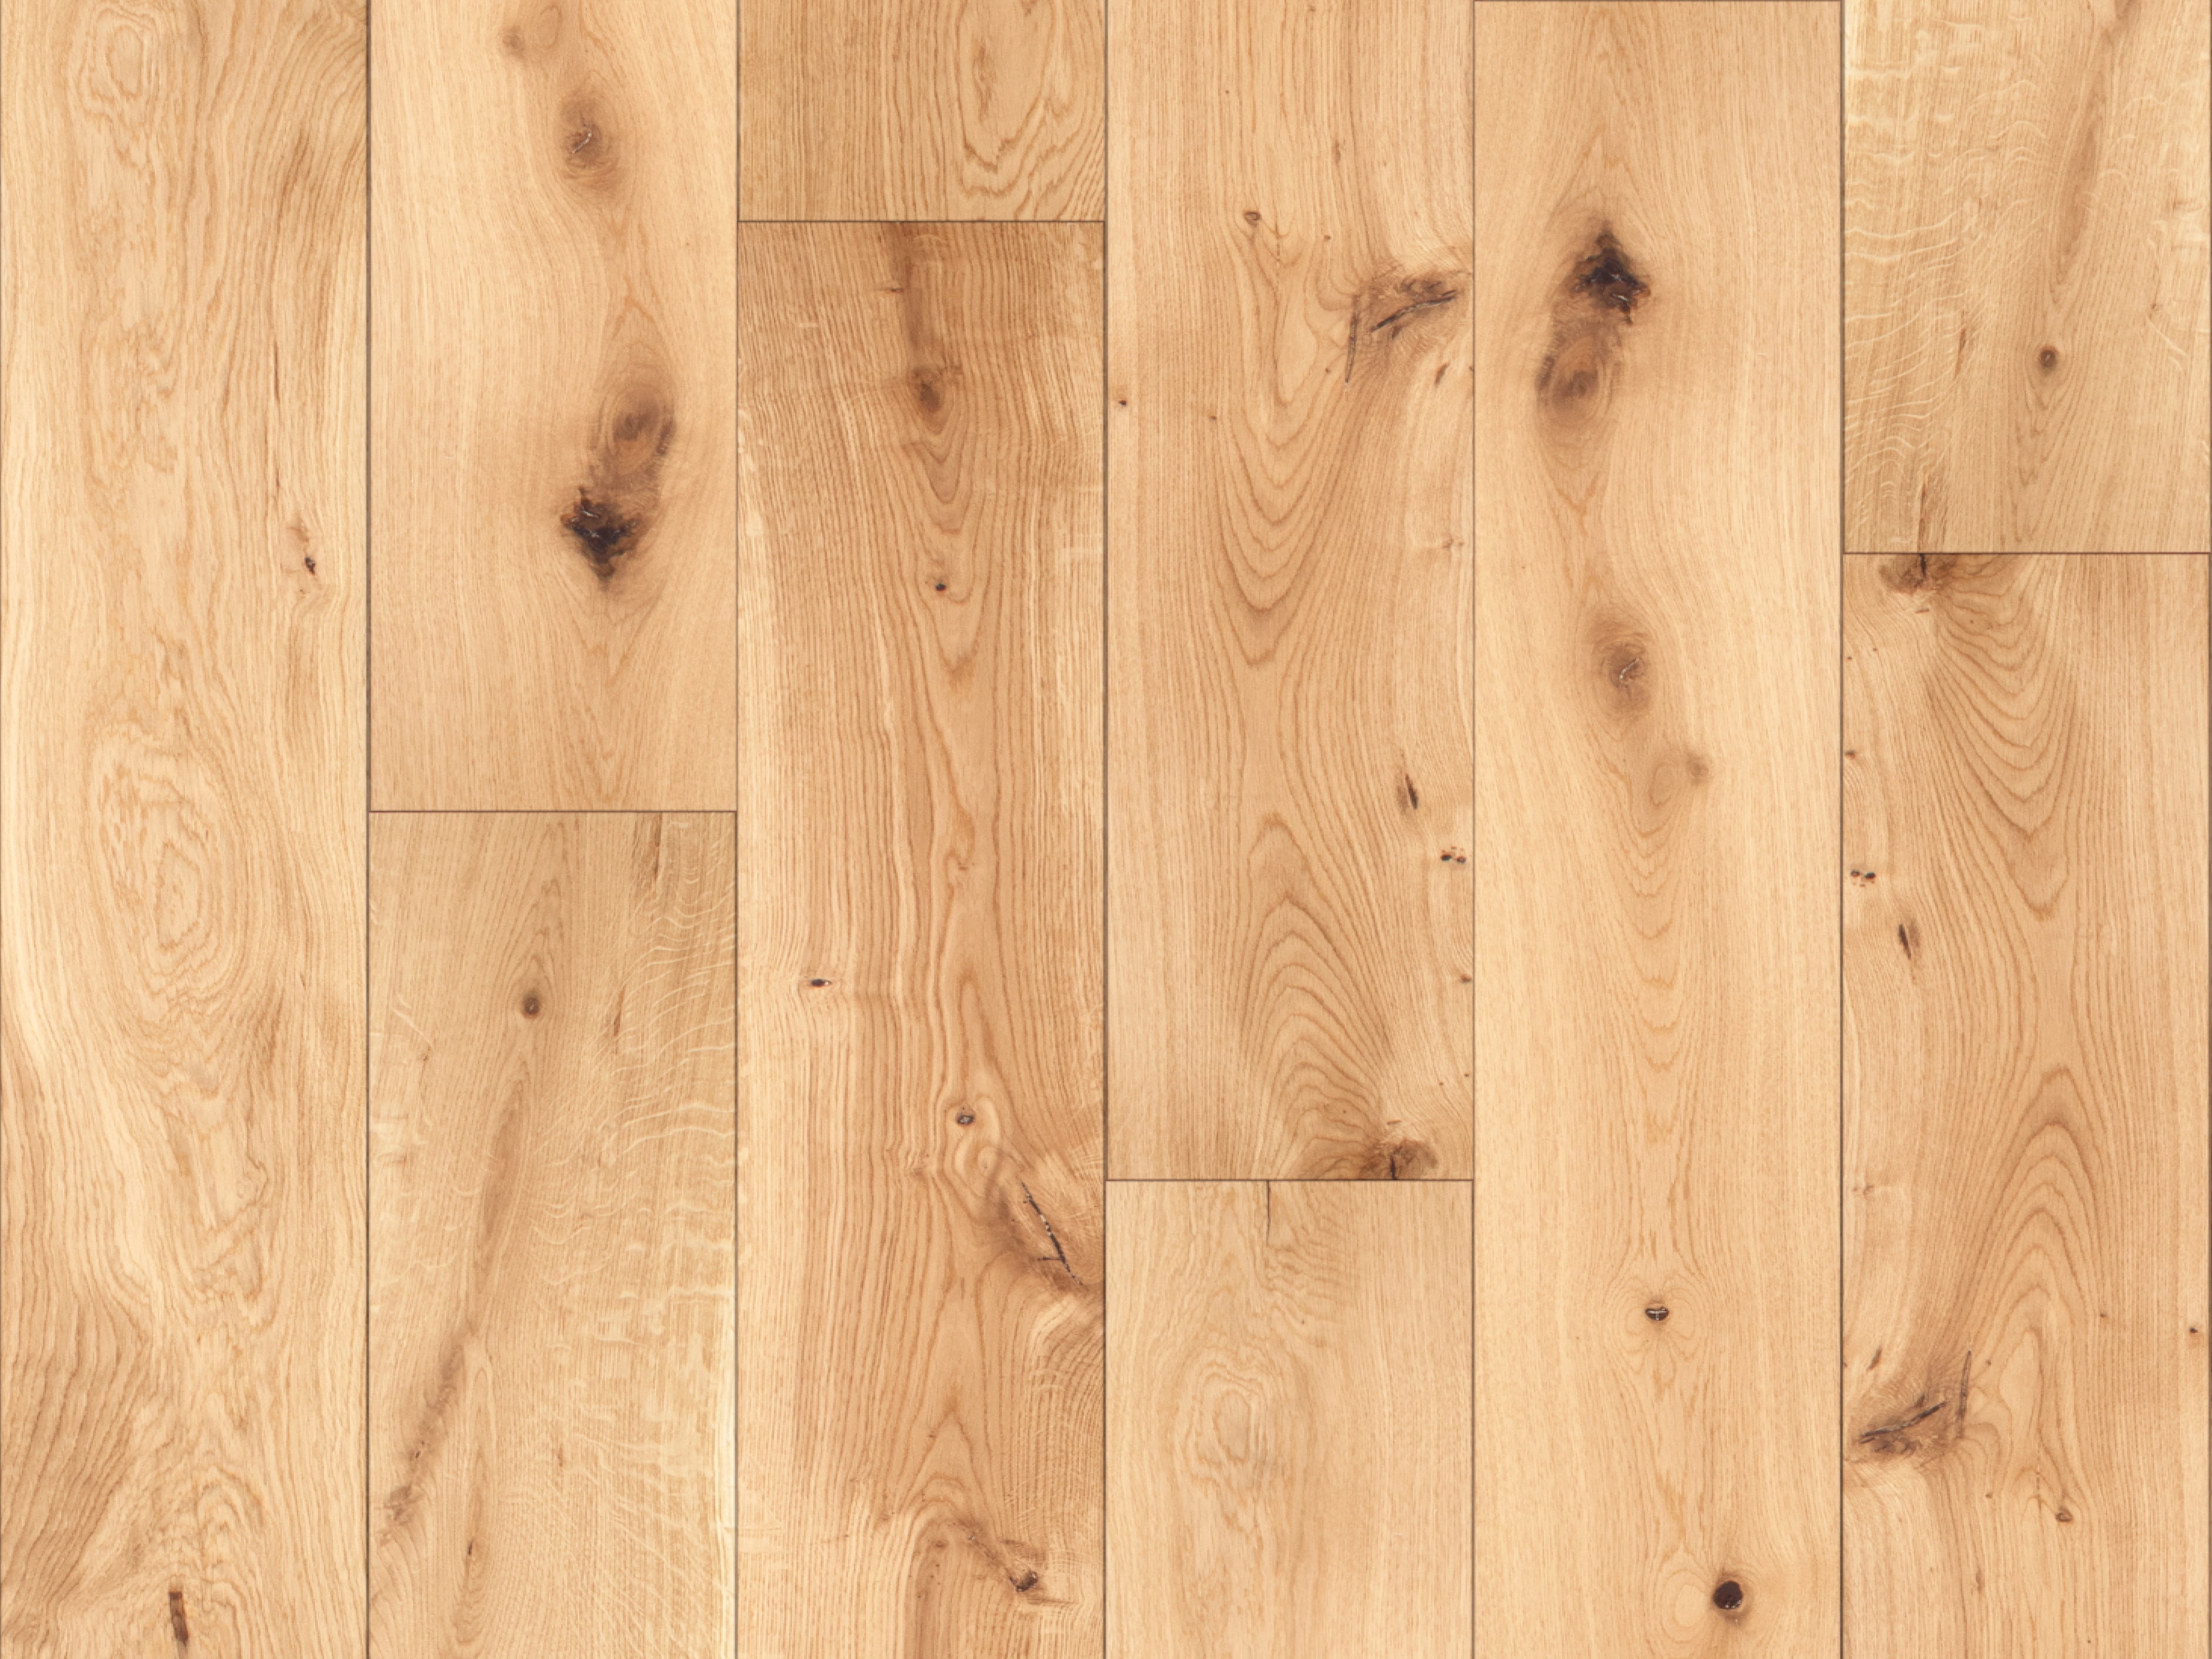 duchateau signature chateau origine european oak engineered hardnatural wood floor uv oil finish for interior use distributed by surface group international